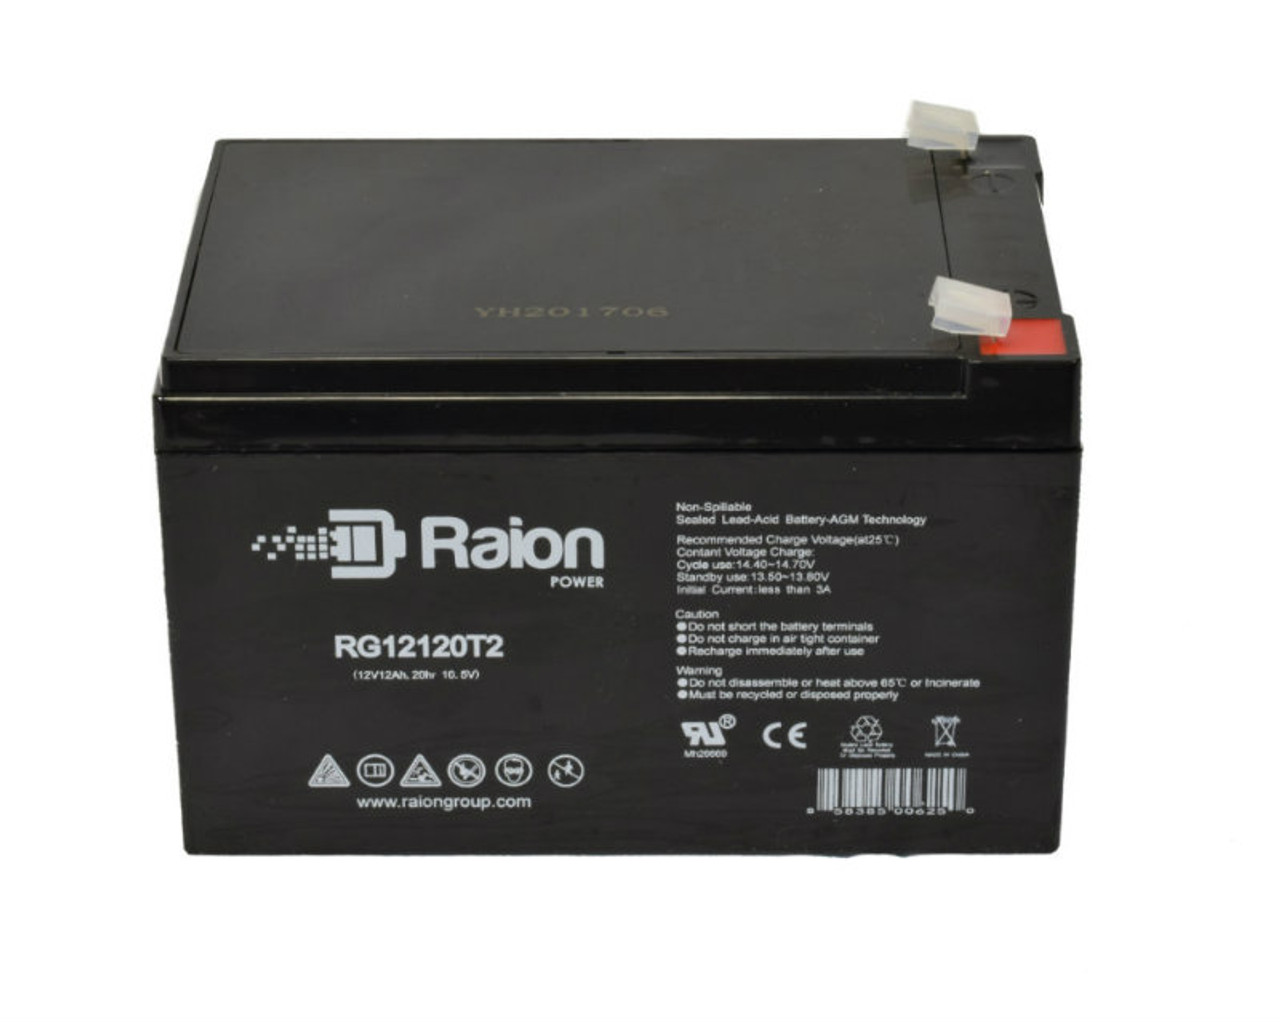 Raion Power RG12120T2 SLA Battery for KIJO JS12-14